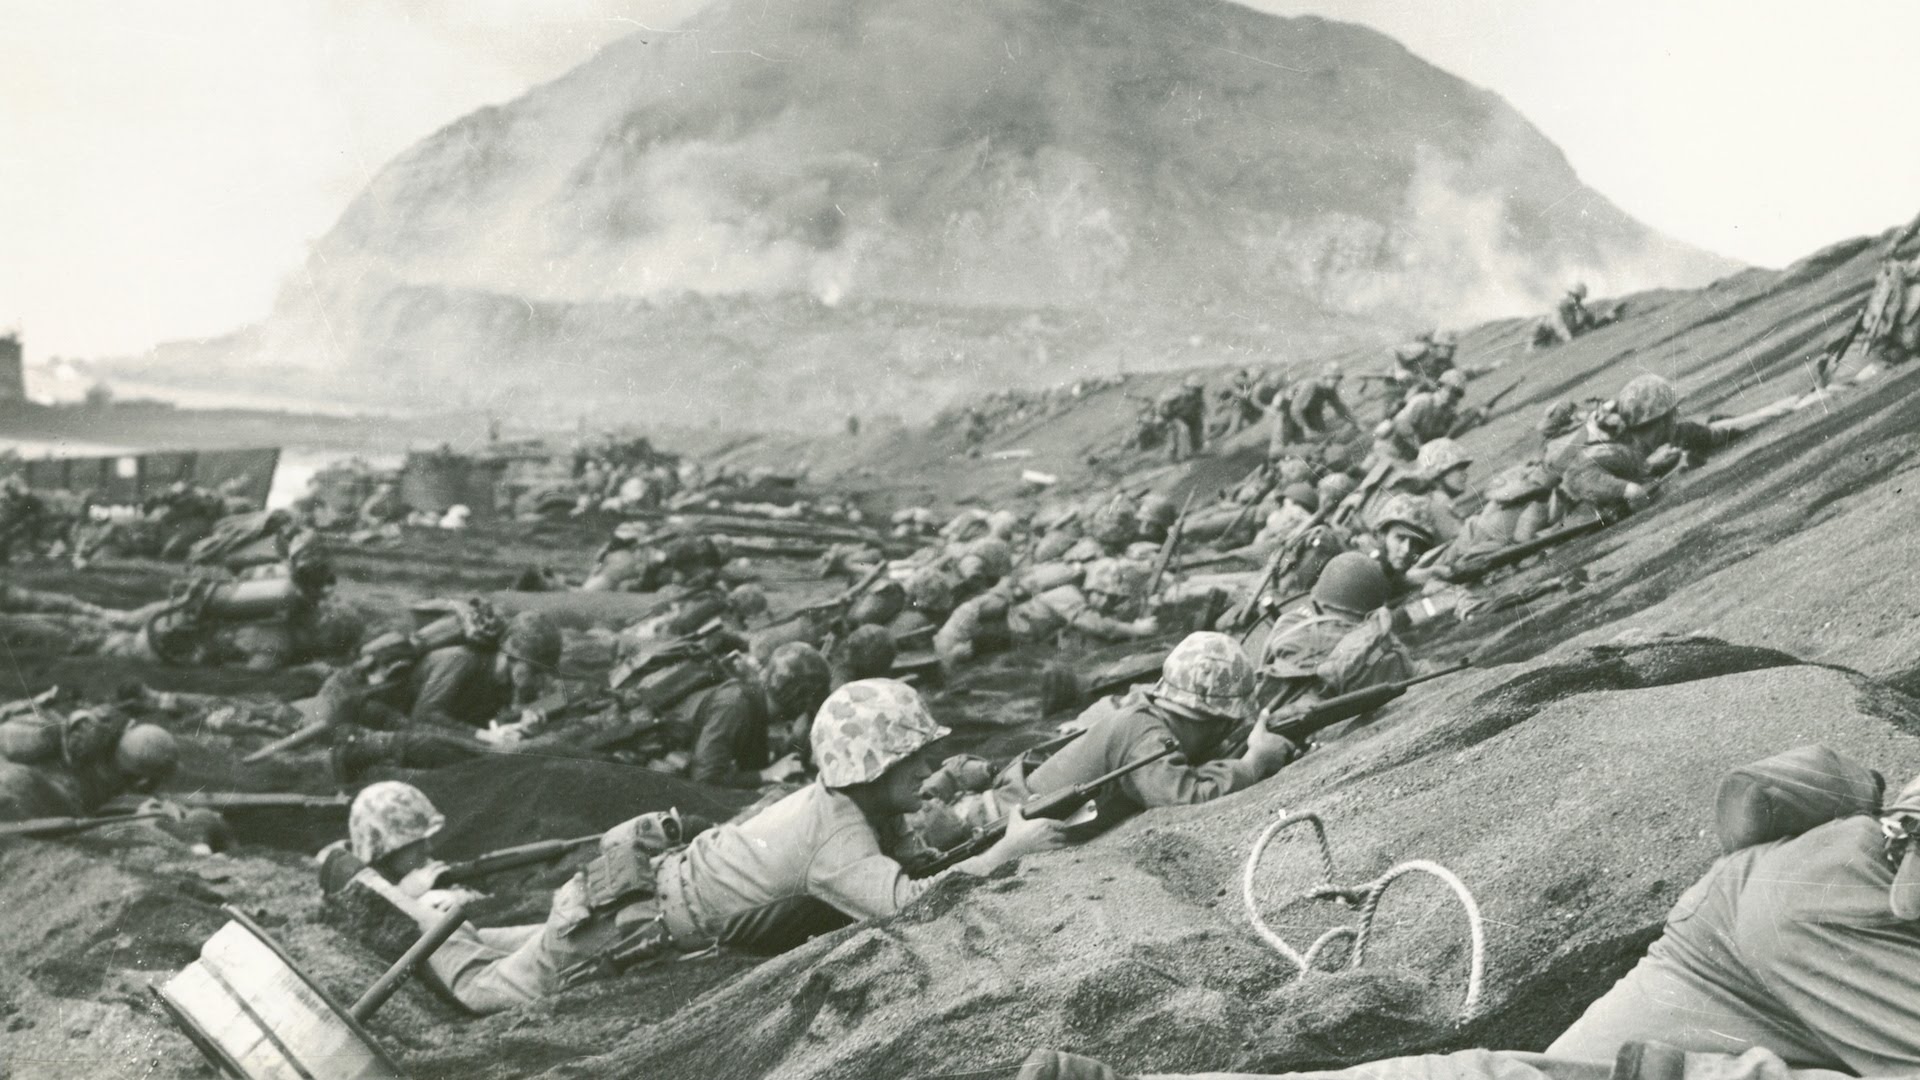 Amazing Battle Of Iwo Jima Pictures & Backgrounds